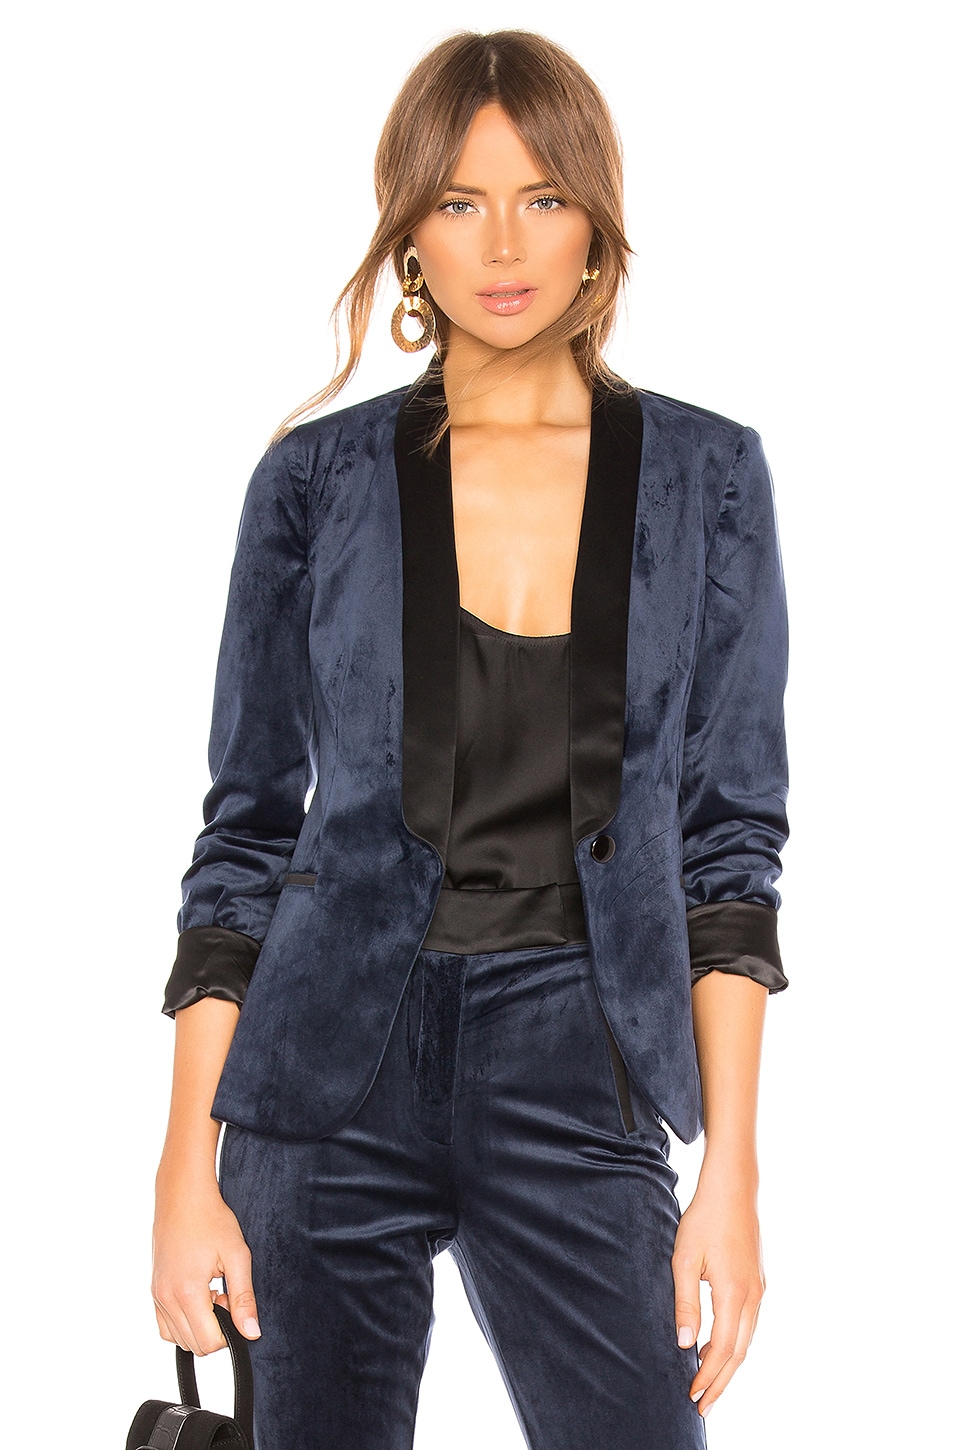 Karina Grimaldi Bruno Velvet Tuxedo Jacket in Sapphire | REVOLVE